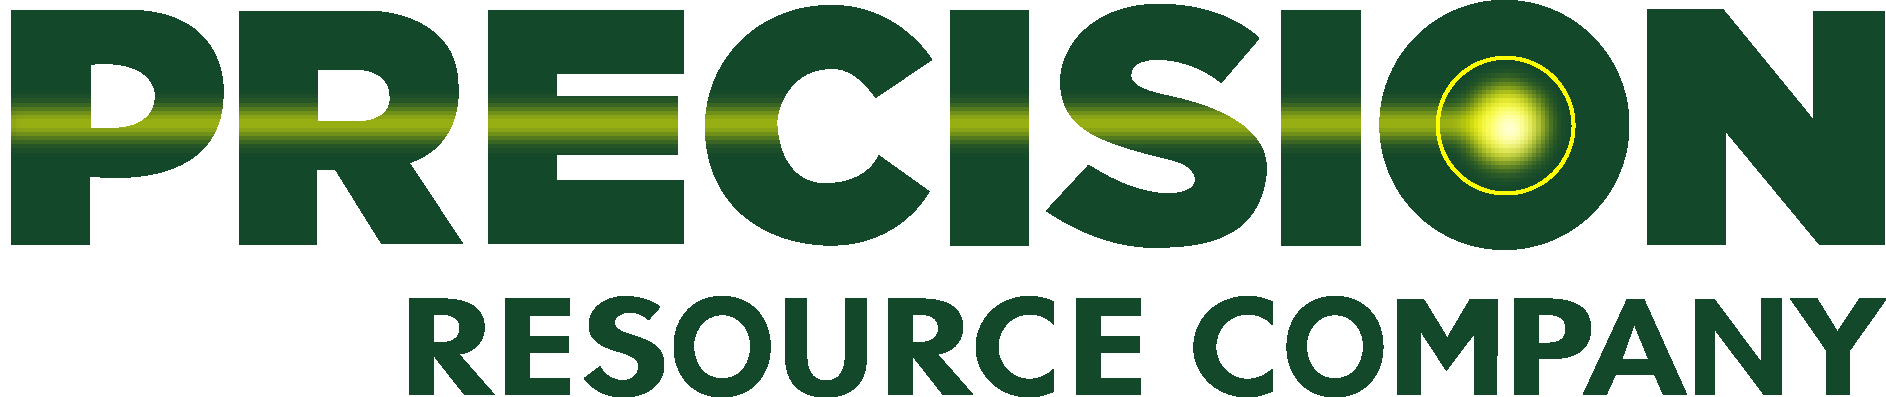 Precision Resource Company Logo Vector